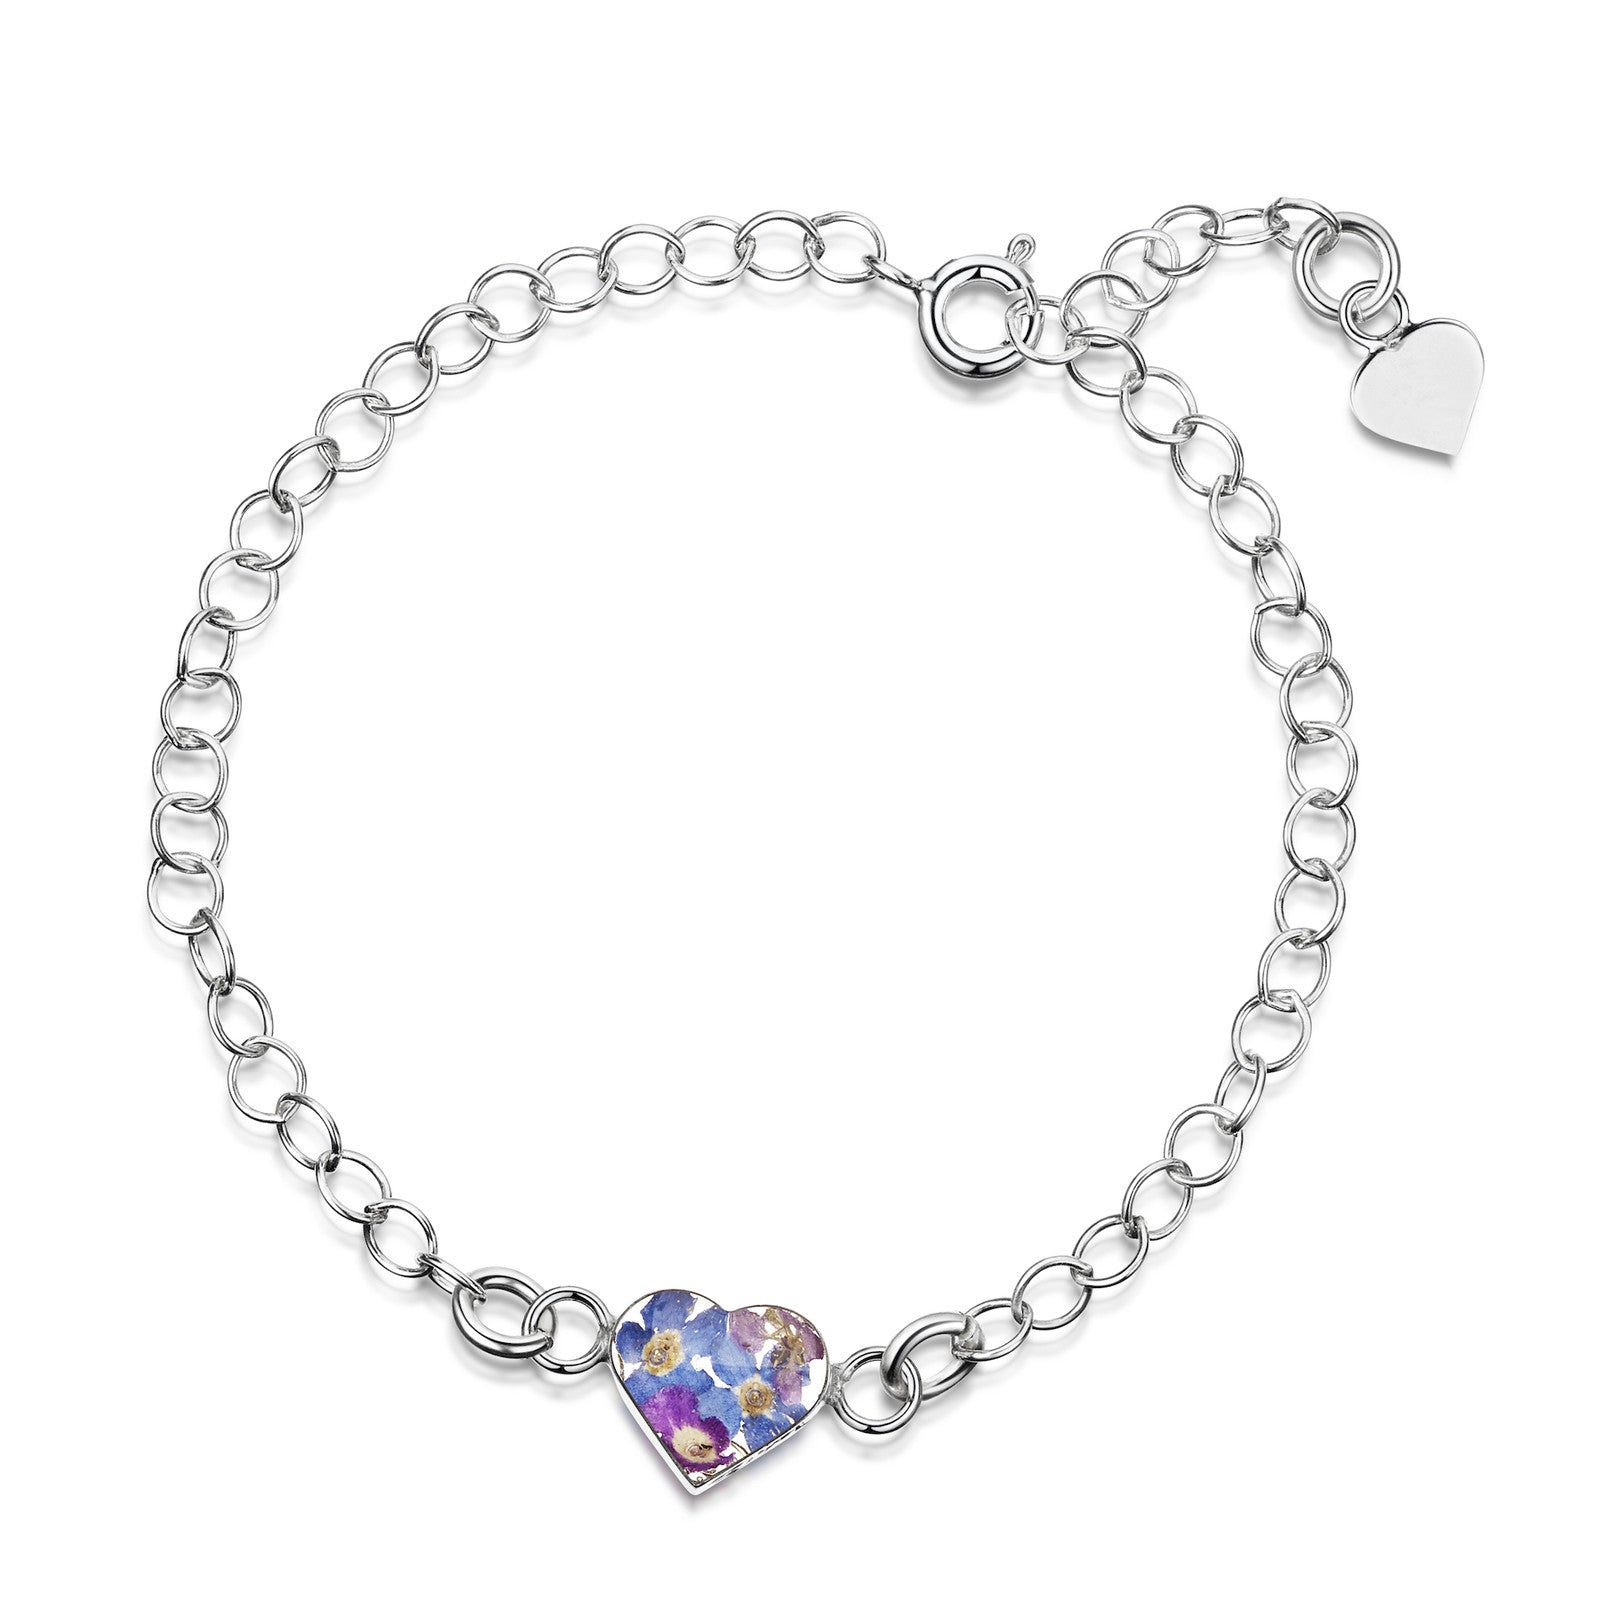 Flower Bracelet - Sterling silver - BLBR03 - Hallmark Jewellers Formby & The Jewellers Bench Widnes